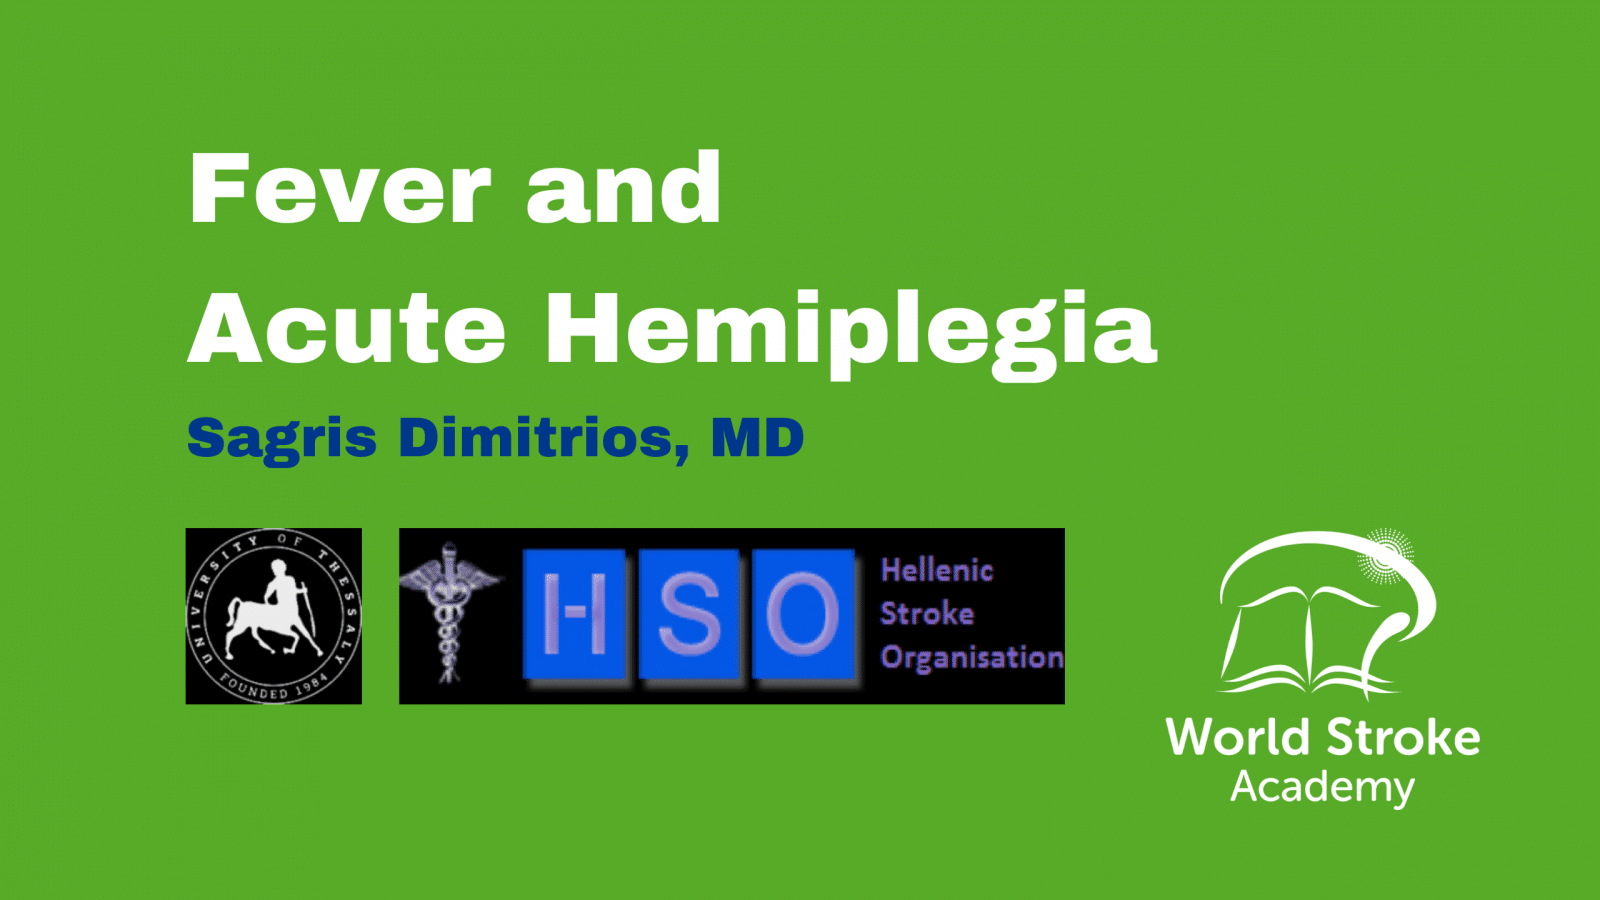 Fever and Acute Hemiplegia